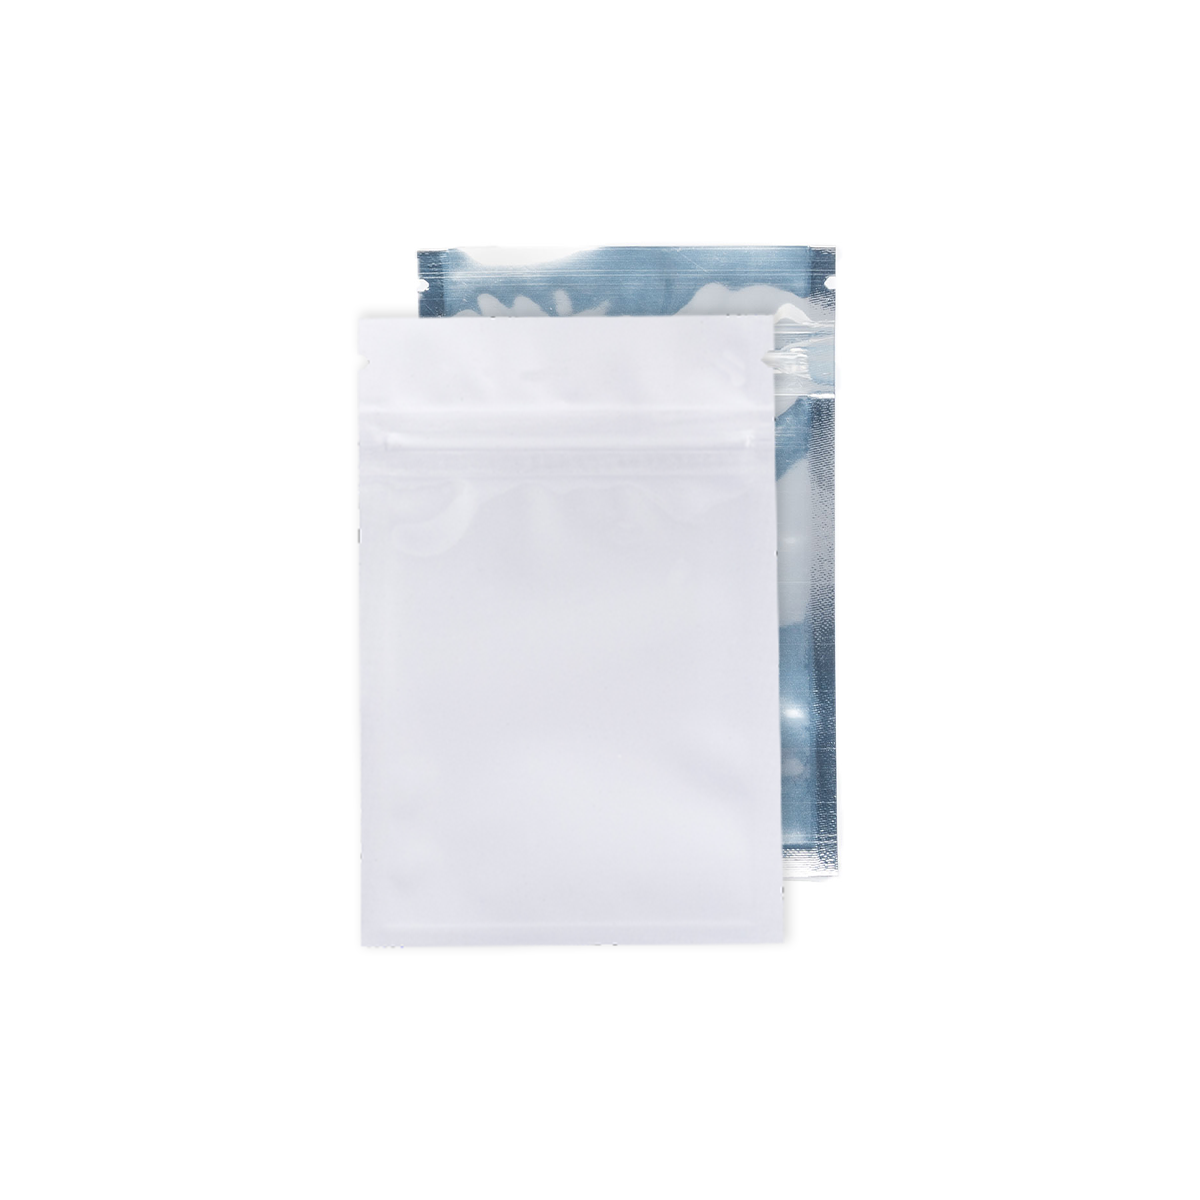 Gram White/Clear Barrier Bags